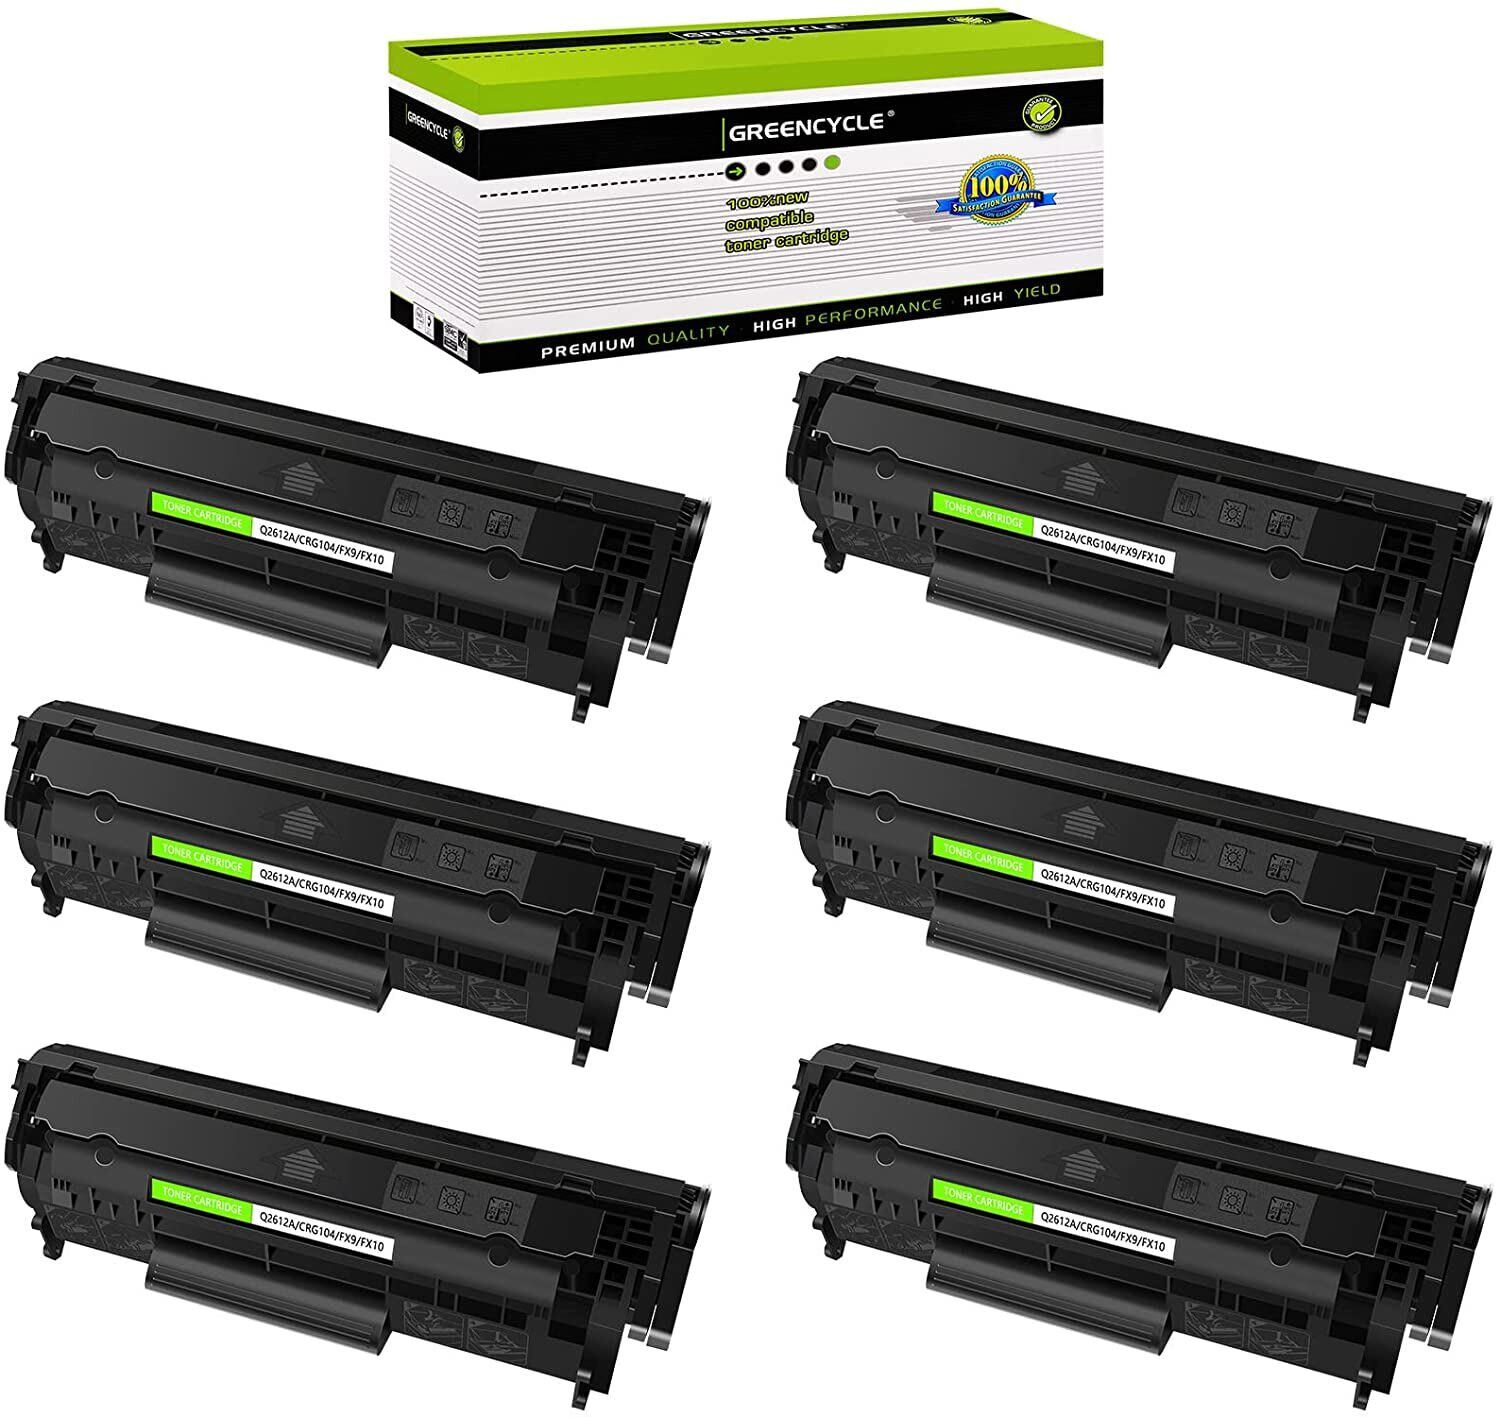 6PK BK Q2612A 12A Toner Cartridge fits for HP LaserJet 1022 1022n 1022nw Printer